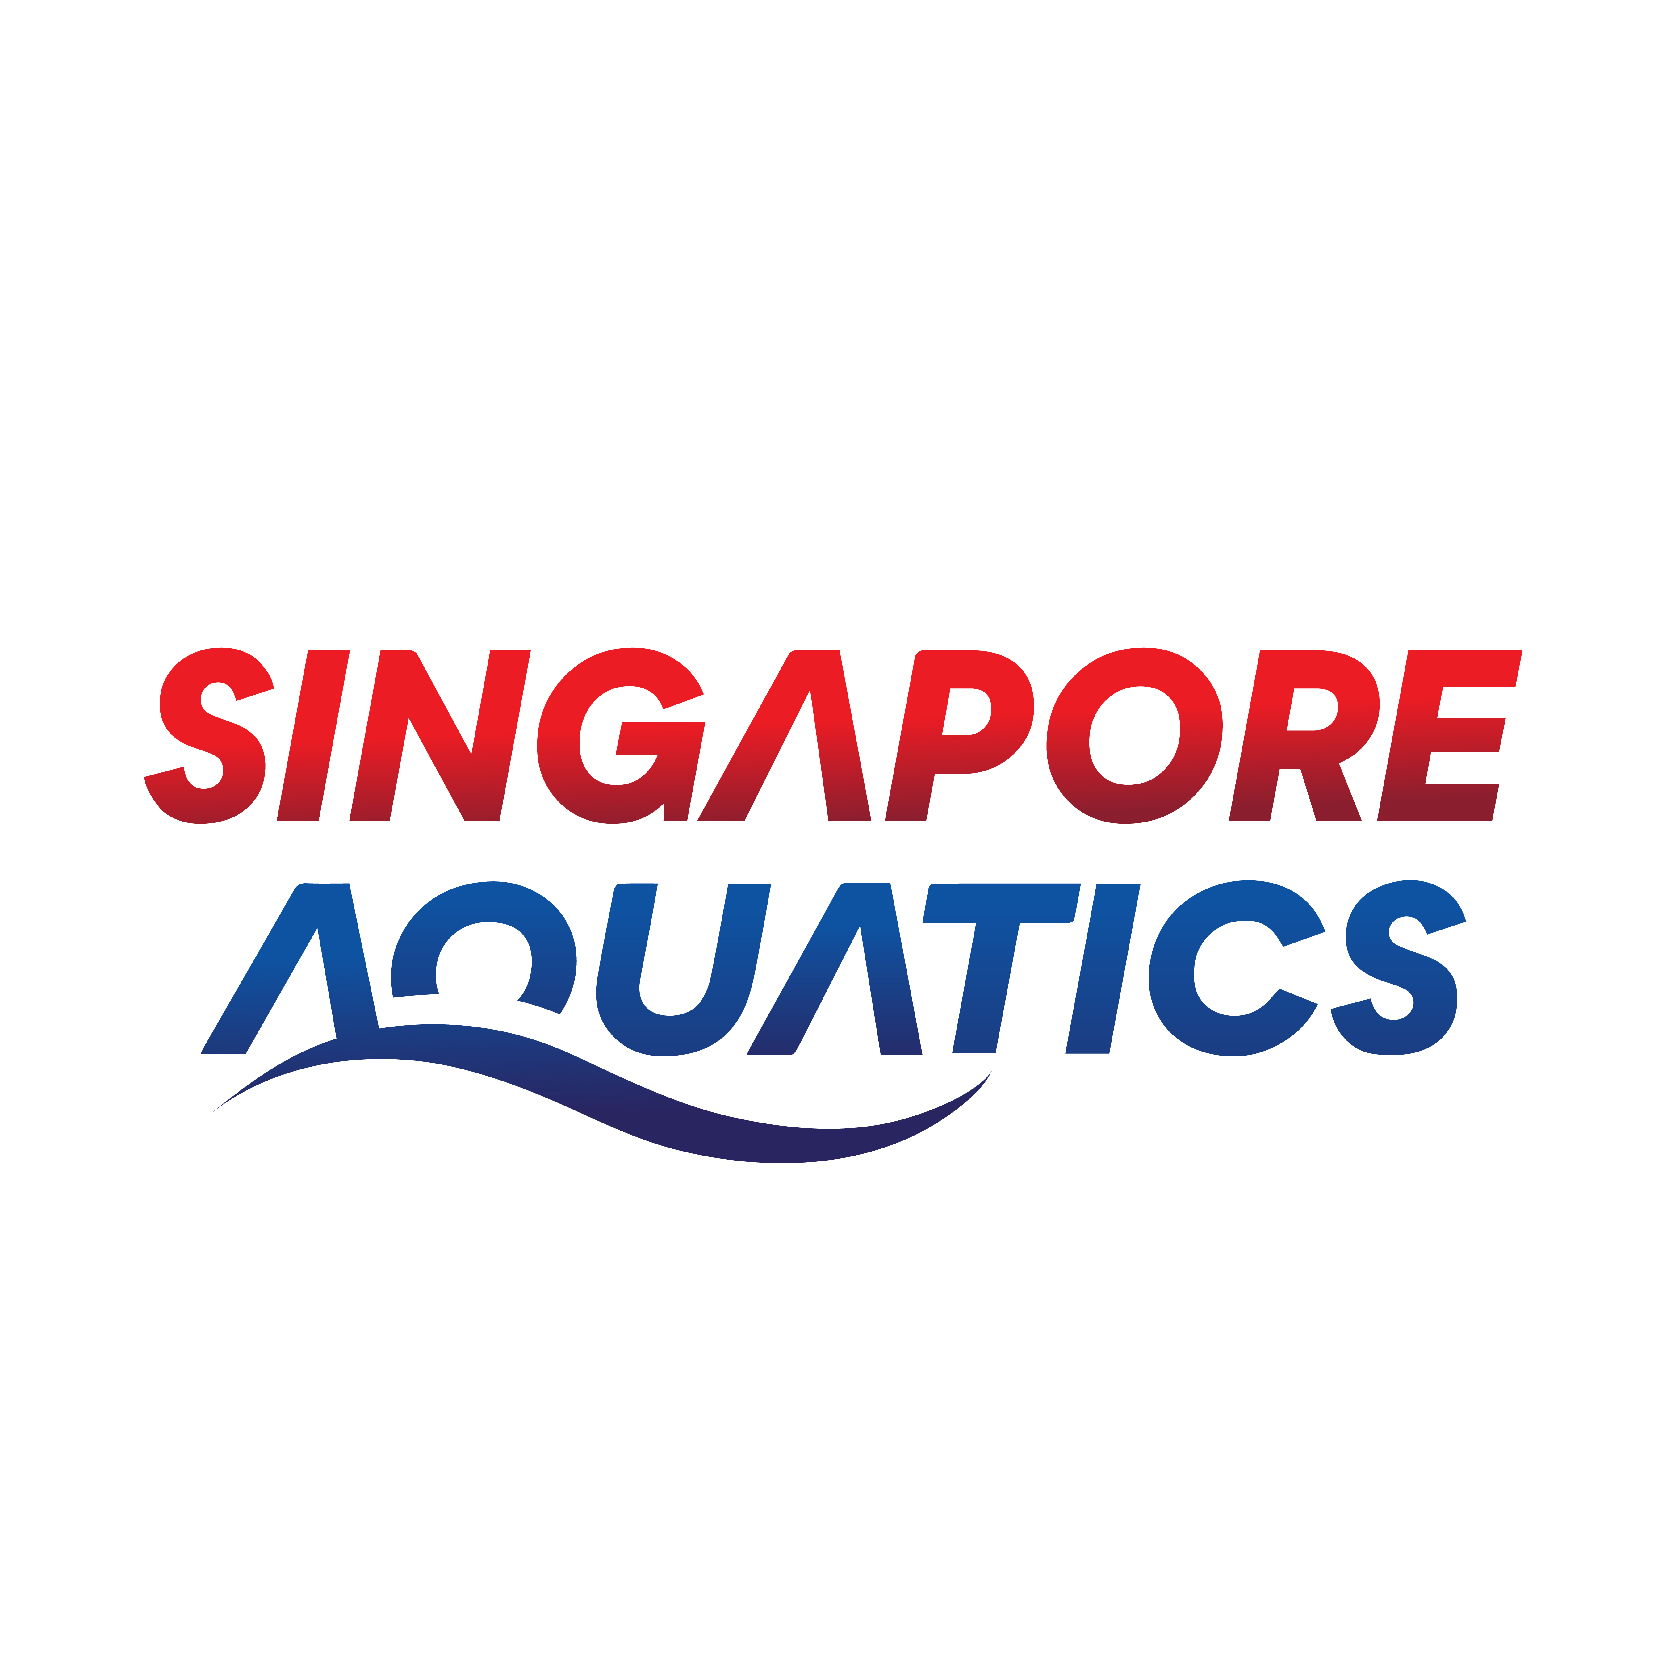 Singapore Aquatics